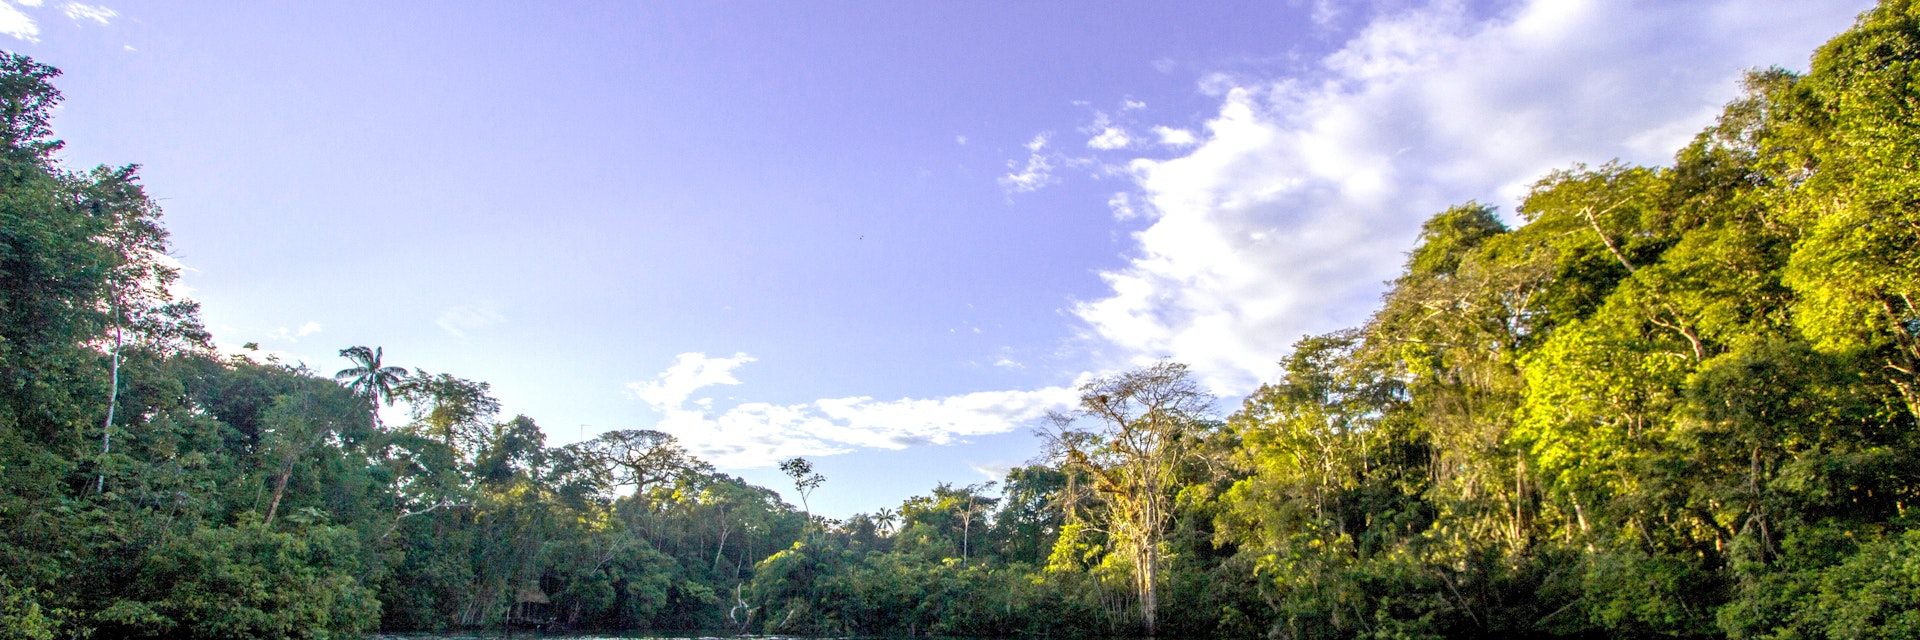 Cuyabeno, Ecuador, Aguarico, Amazon Rainforest